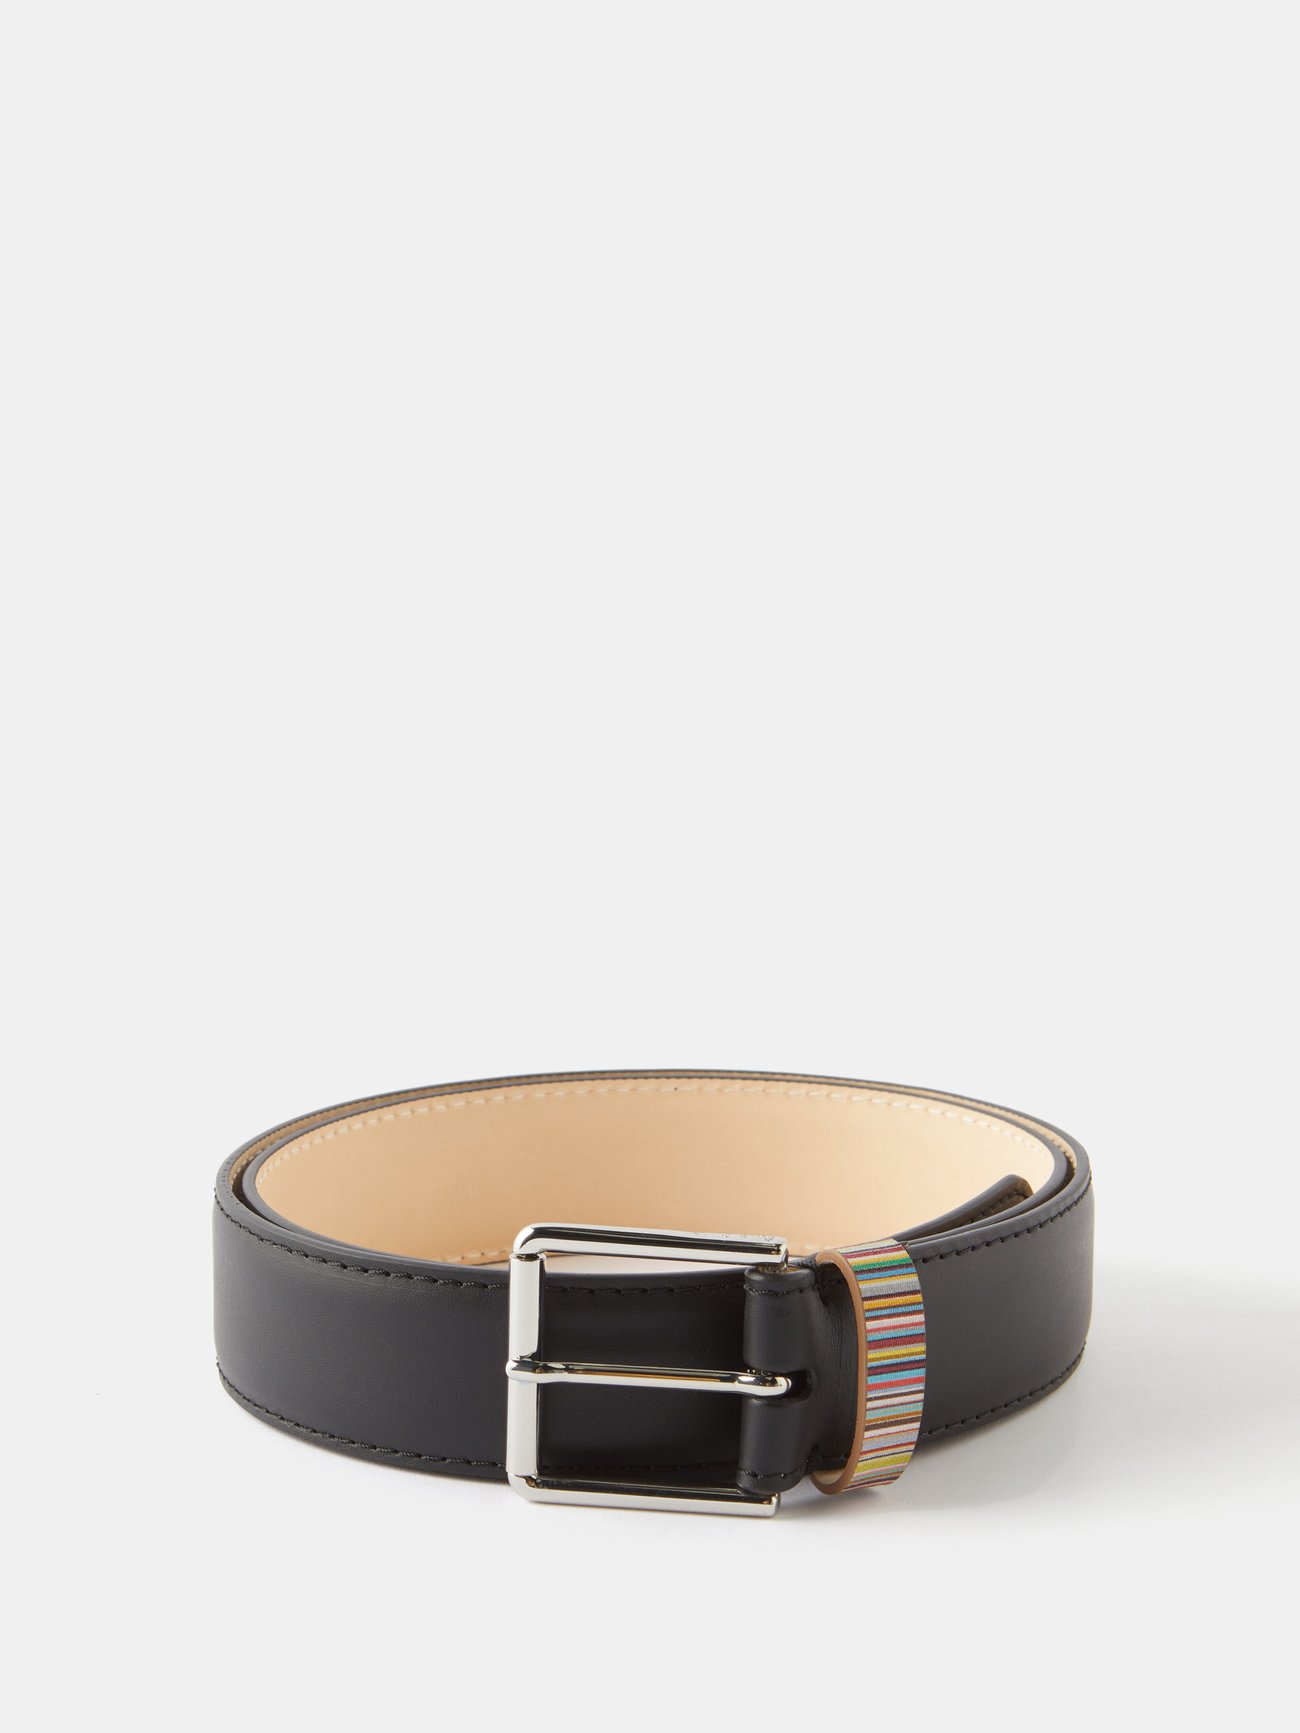 US Stripe Smith Paul | leather MATCHES Black | Signature belt